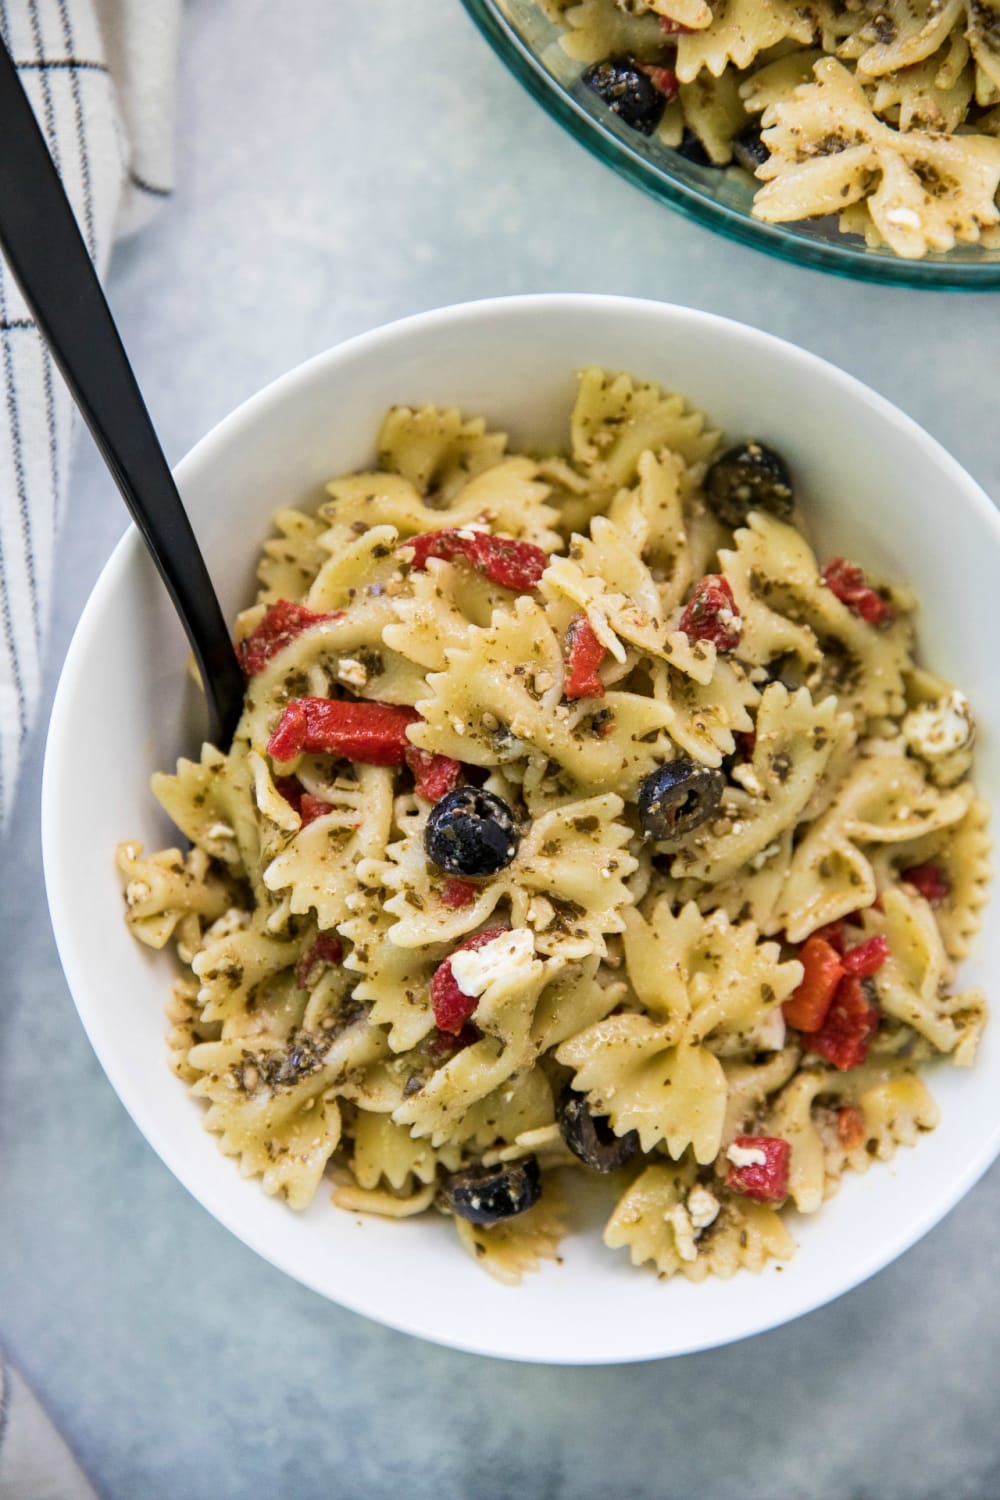 Only 5 ingredients & 15 minutes to make this easy pesto pasta salad!